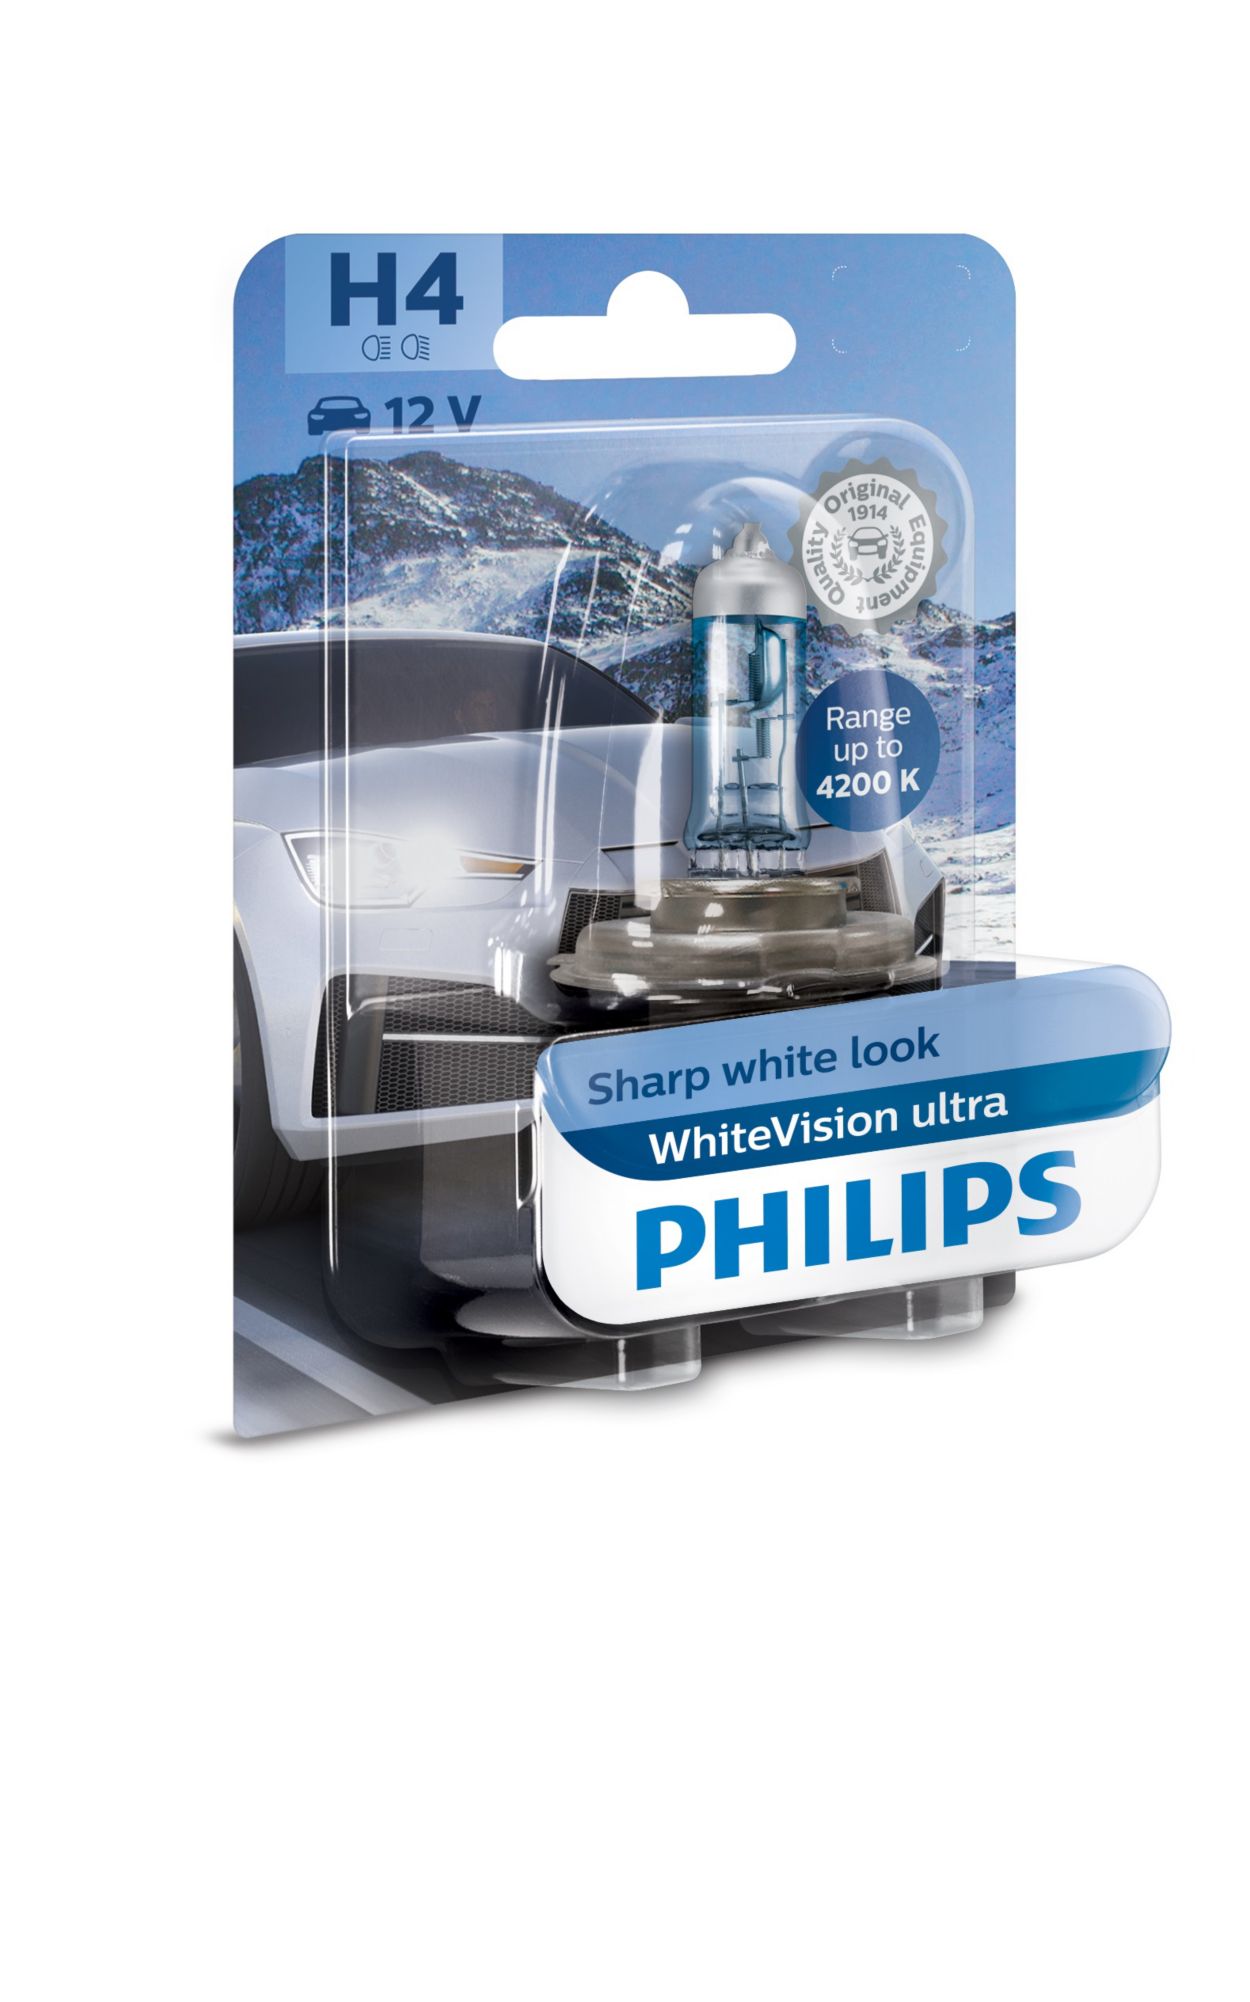 Philips H4 P43t-38 12342 Diamond Vision Car headlight Bulb (White) (Twin) 12V  60/55W at Rs 1050/pair, Car LED Headlight Bulb in Kolkata